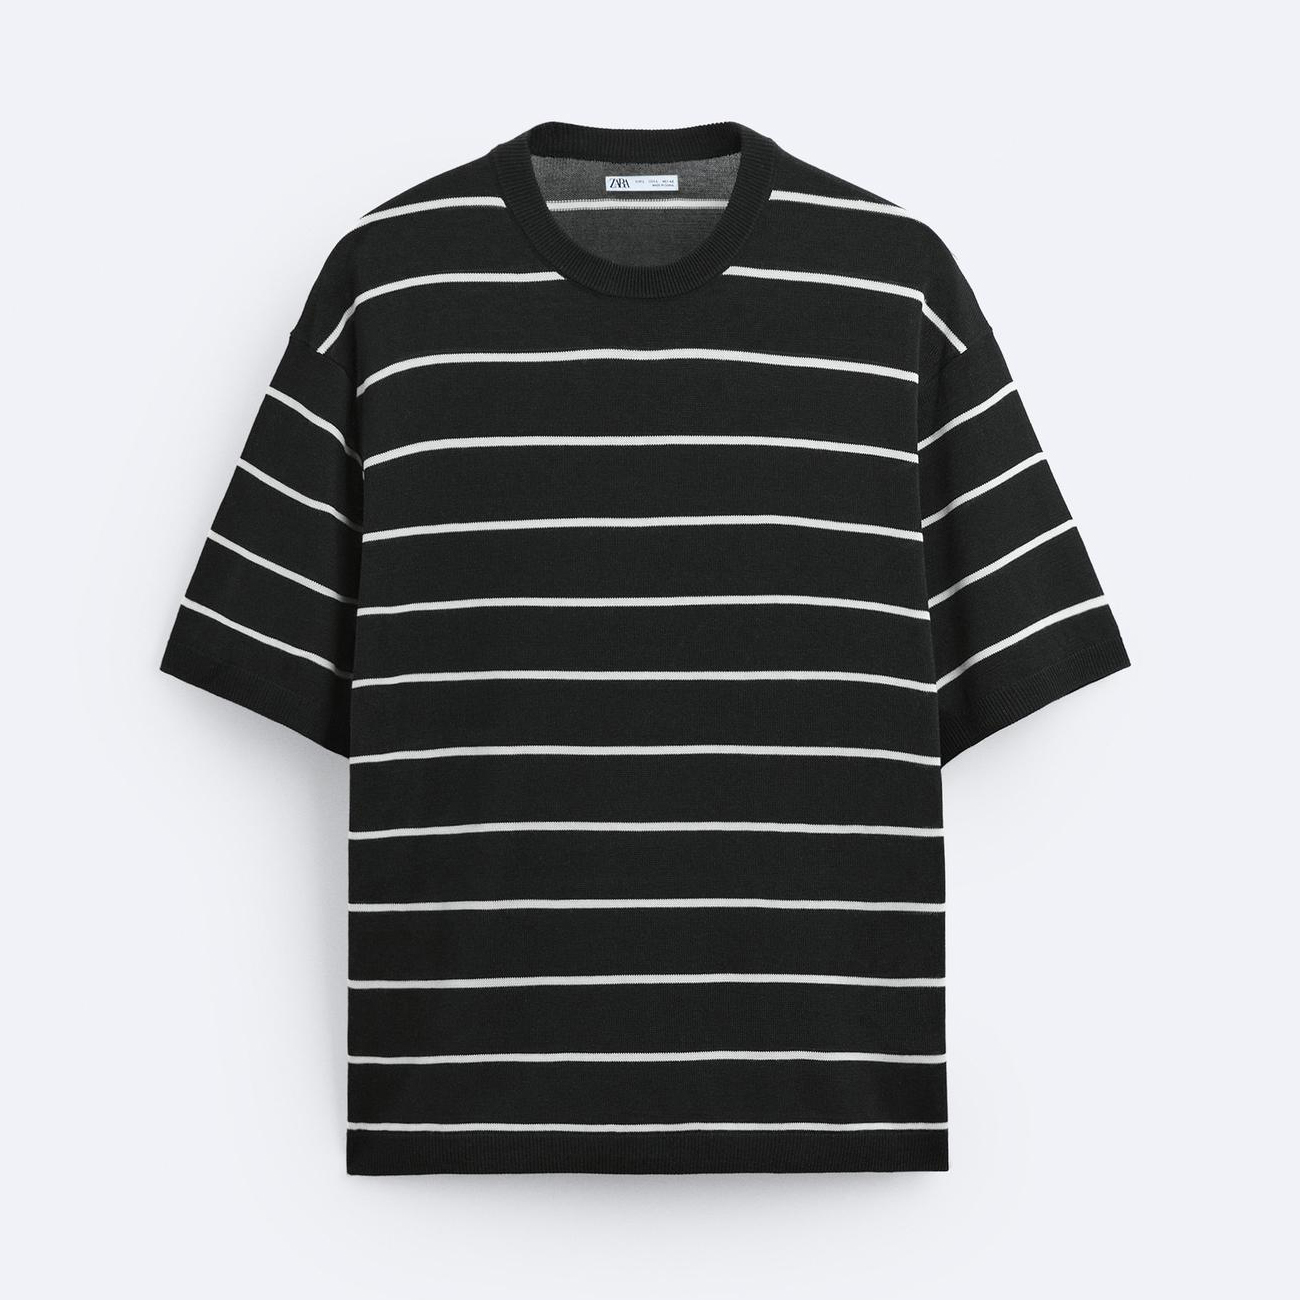 Футболка Zara Striped Textured Knit, черный/белый футболка zara striped with patch белый черный